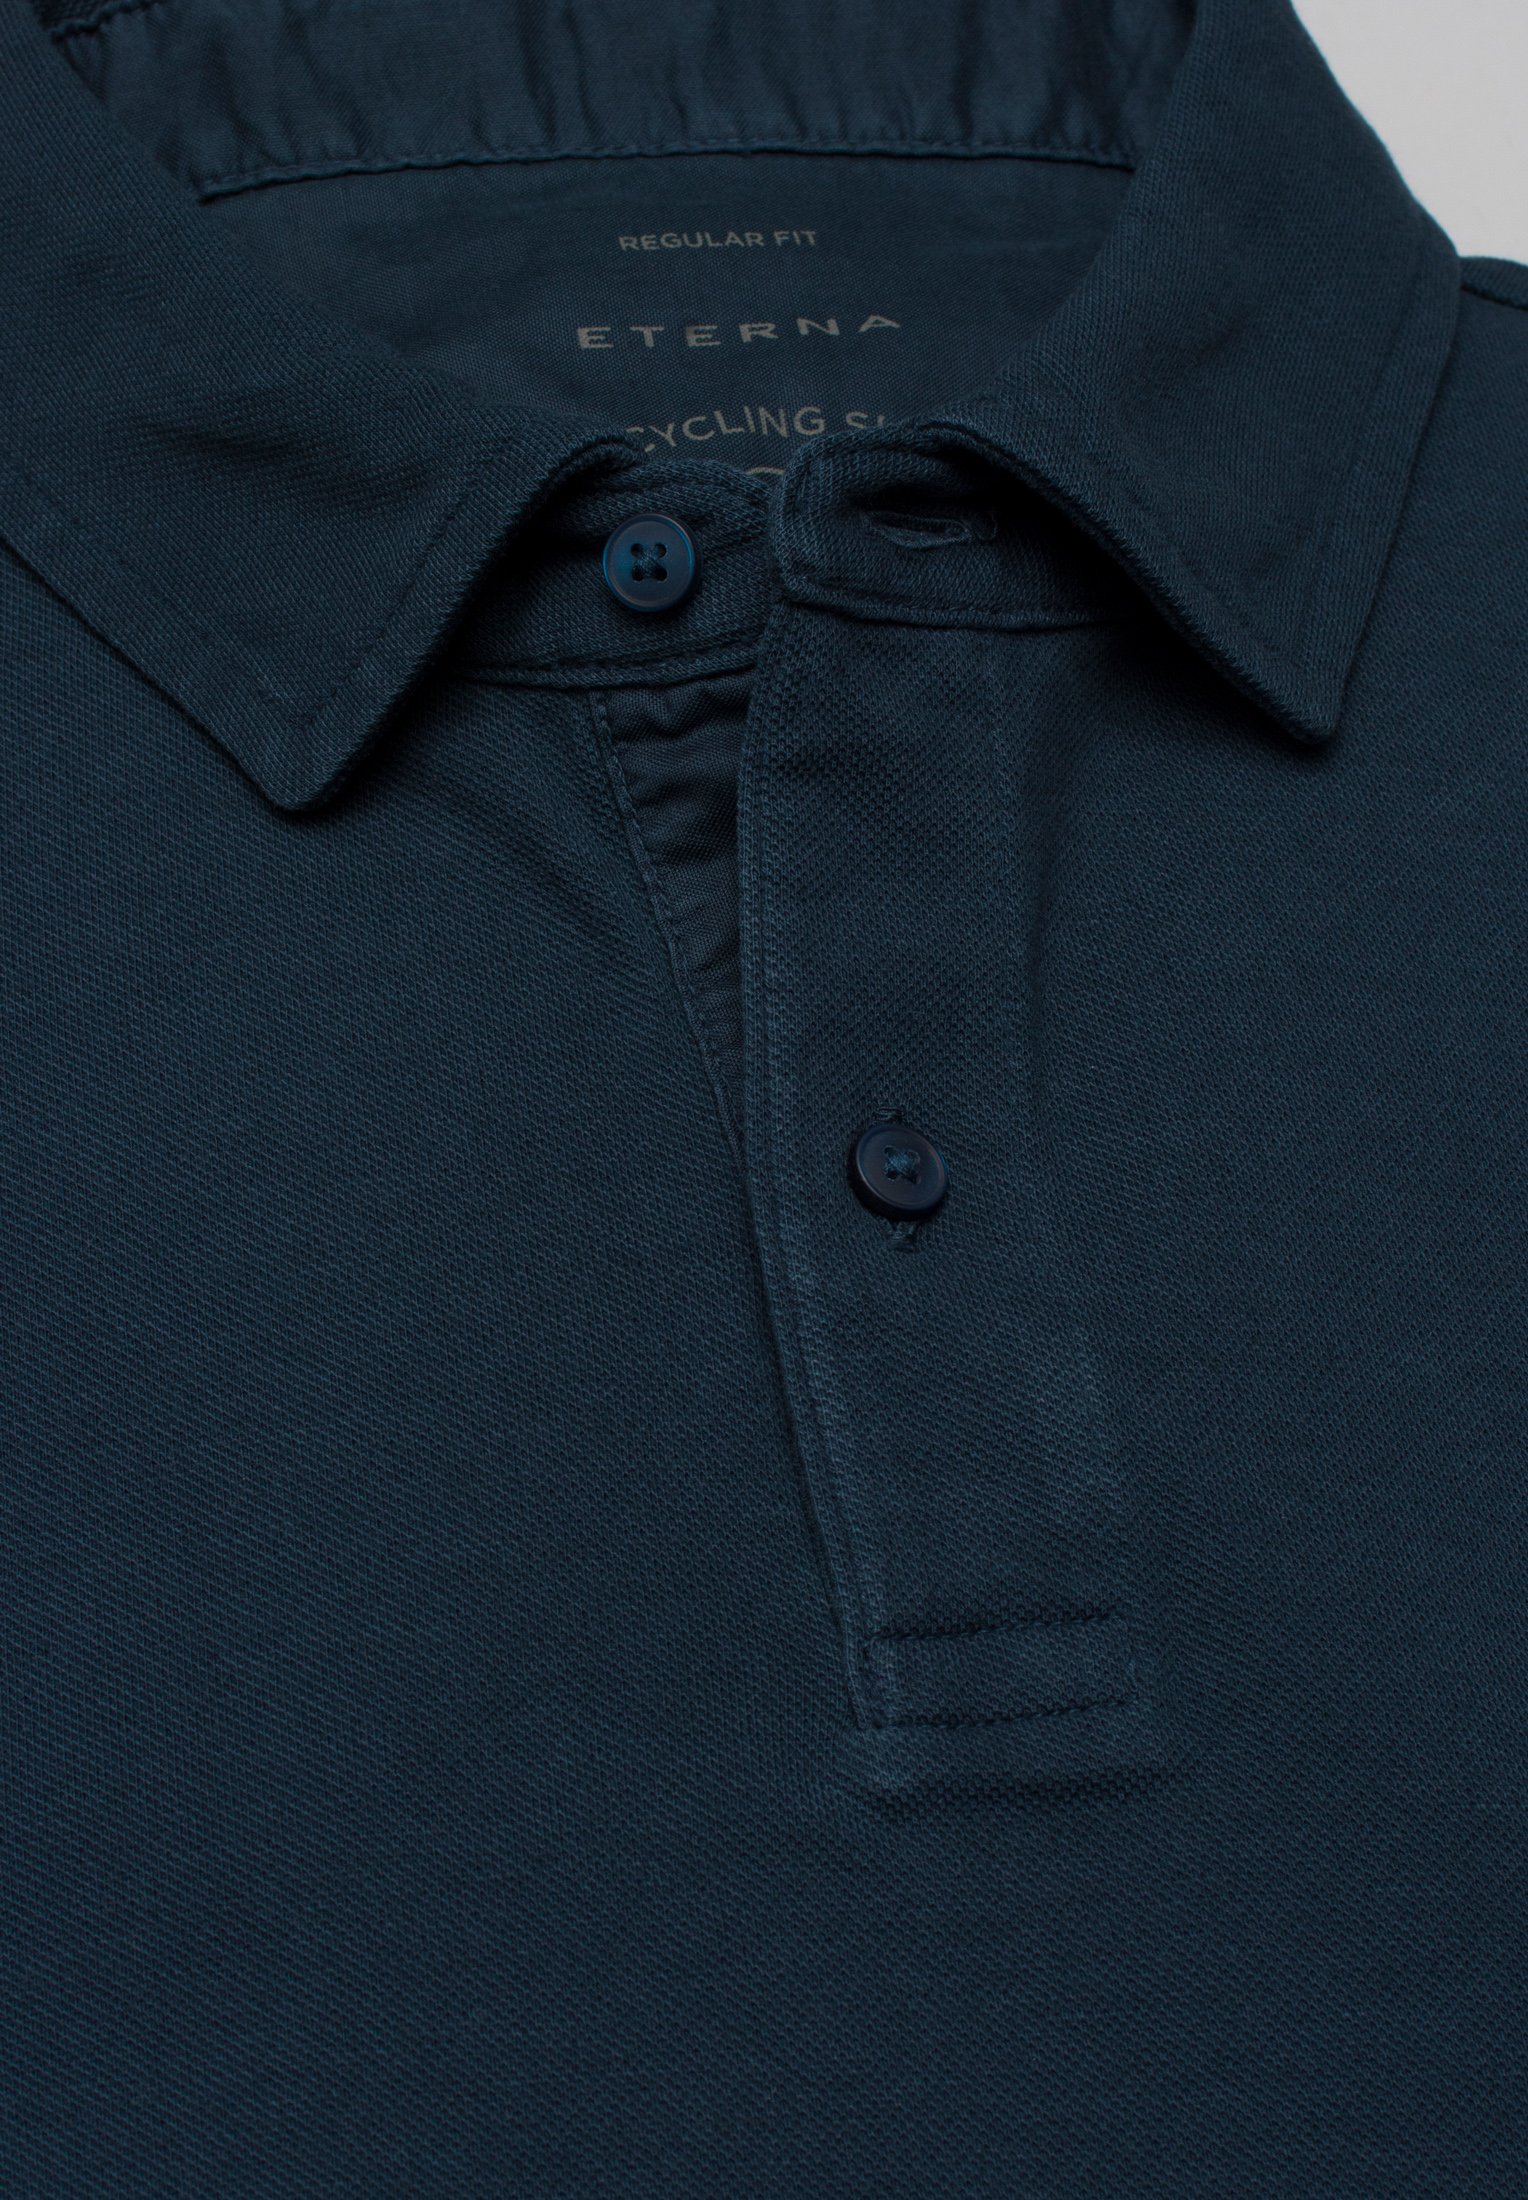 MODERN FIT Poloshirt | | M dunkelblau dunkelblau in | unifarben | Kurzarm 1SP00087-01-81-M-1/2